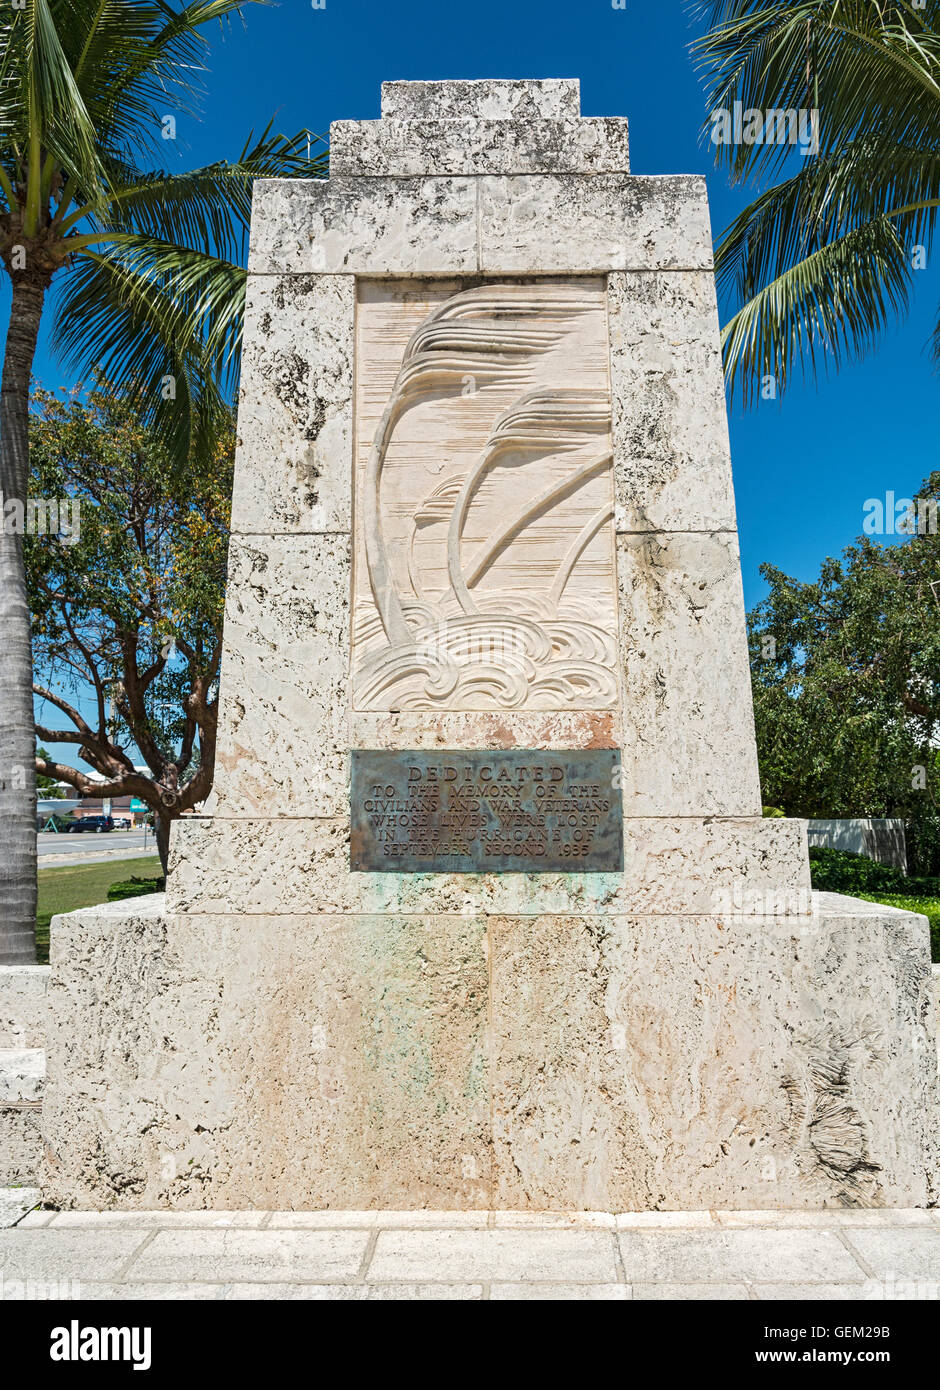 Florida Keys, Islamorada, Florida Keys aka 1935 Hurricane Monument commémoratif Banque D'Images